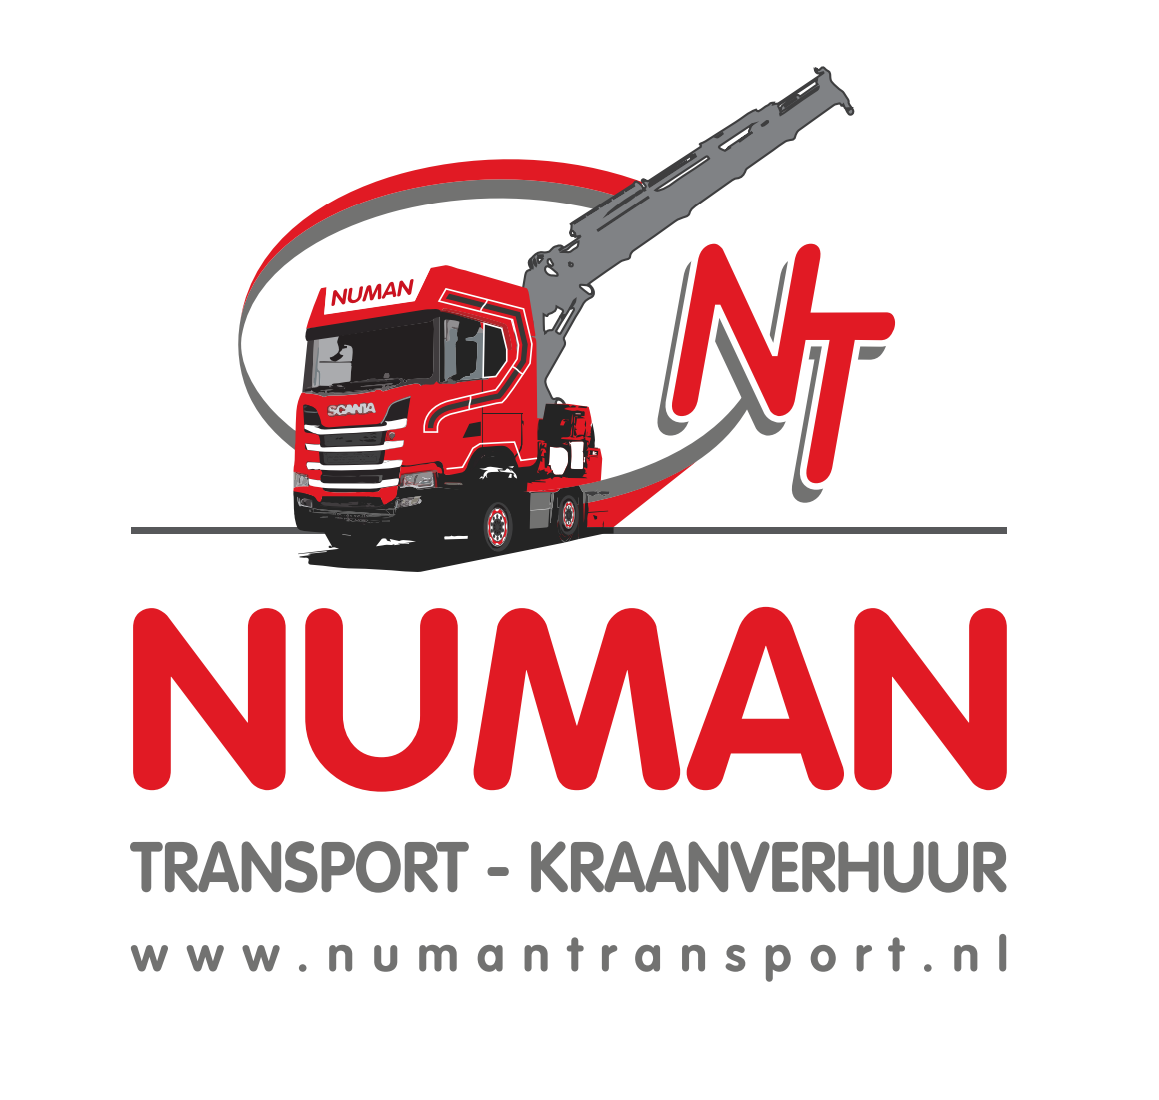 Numan Transport